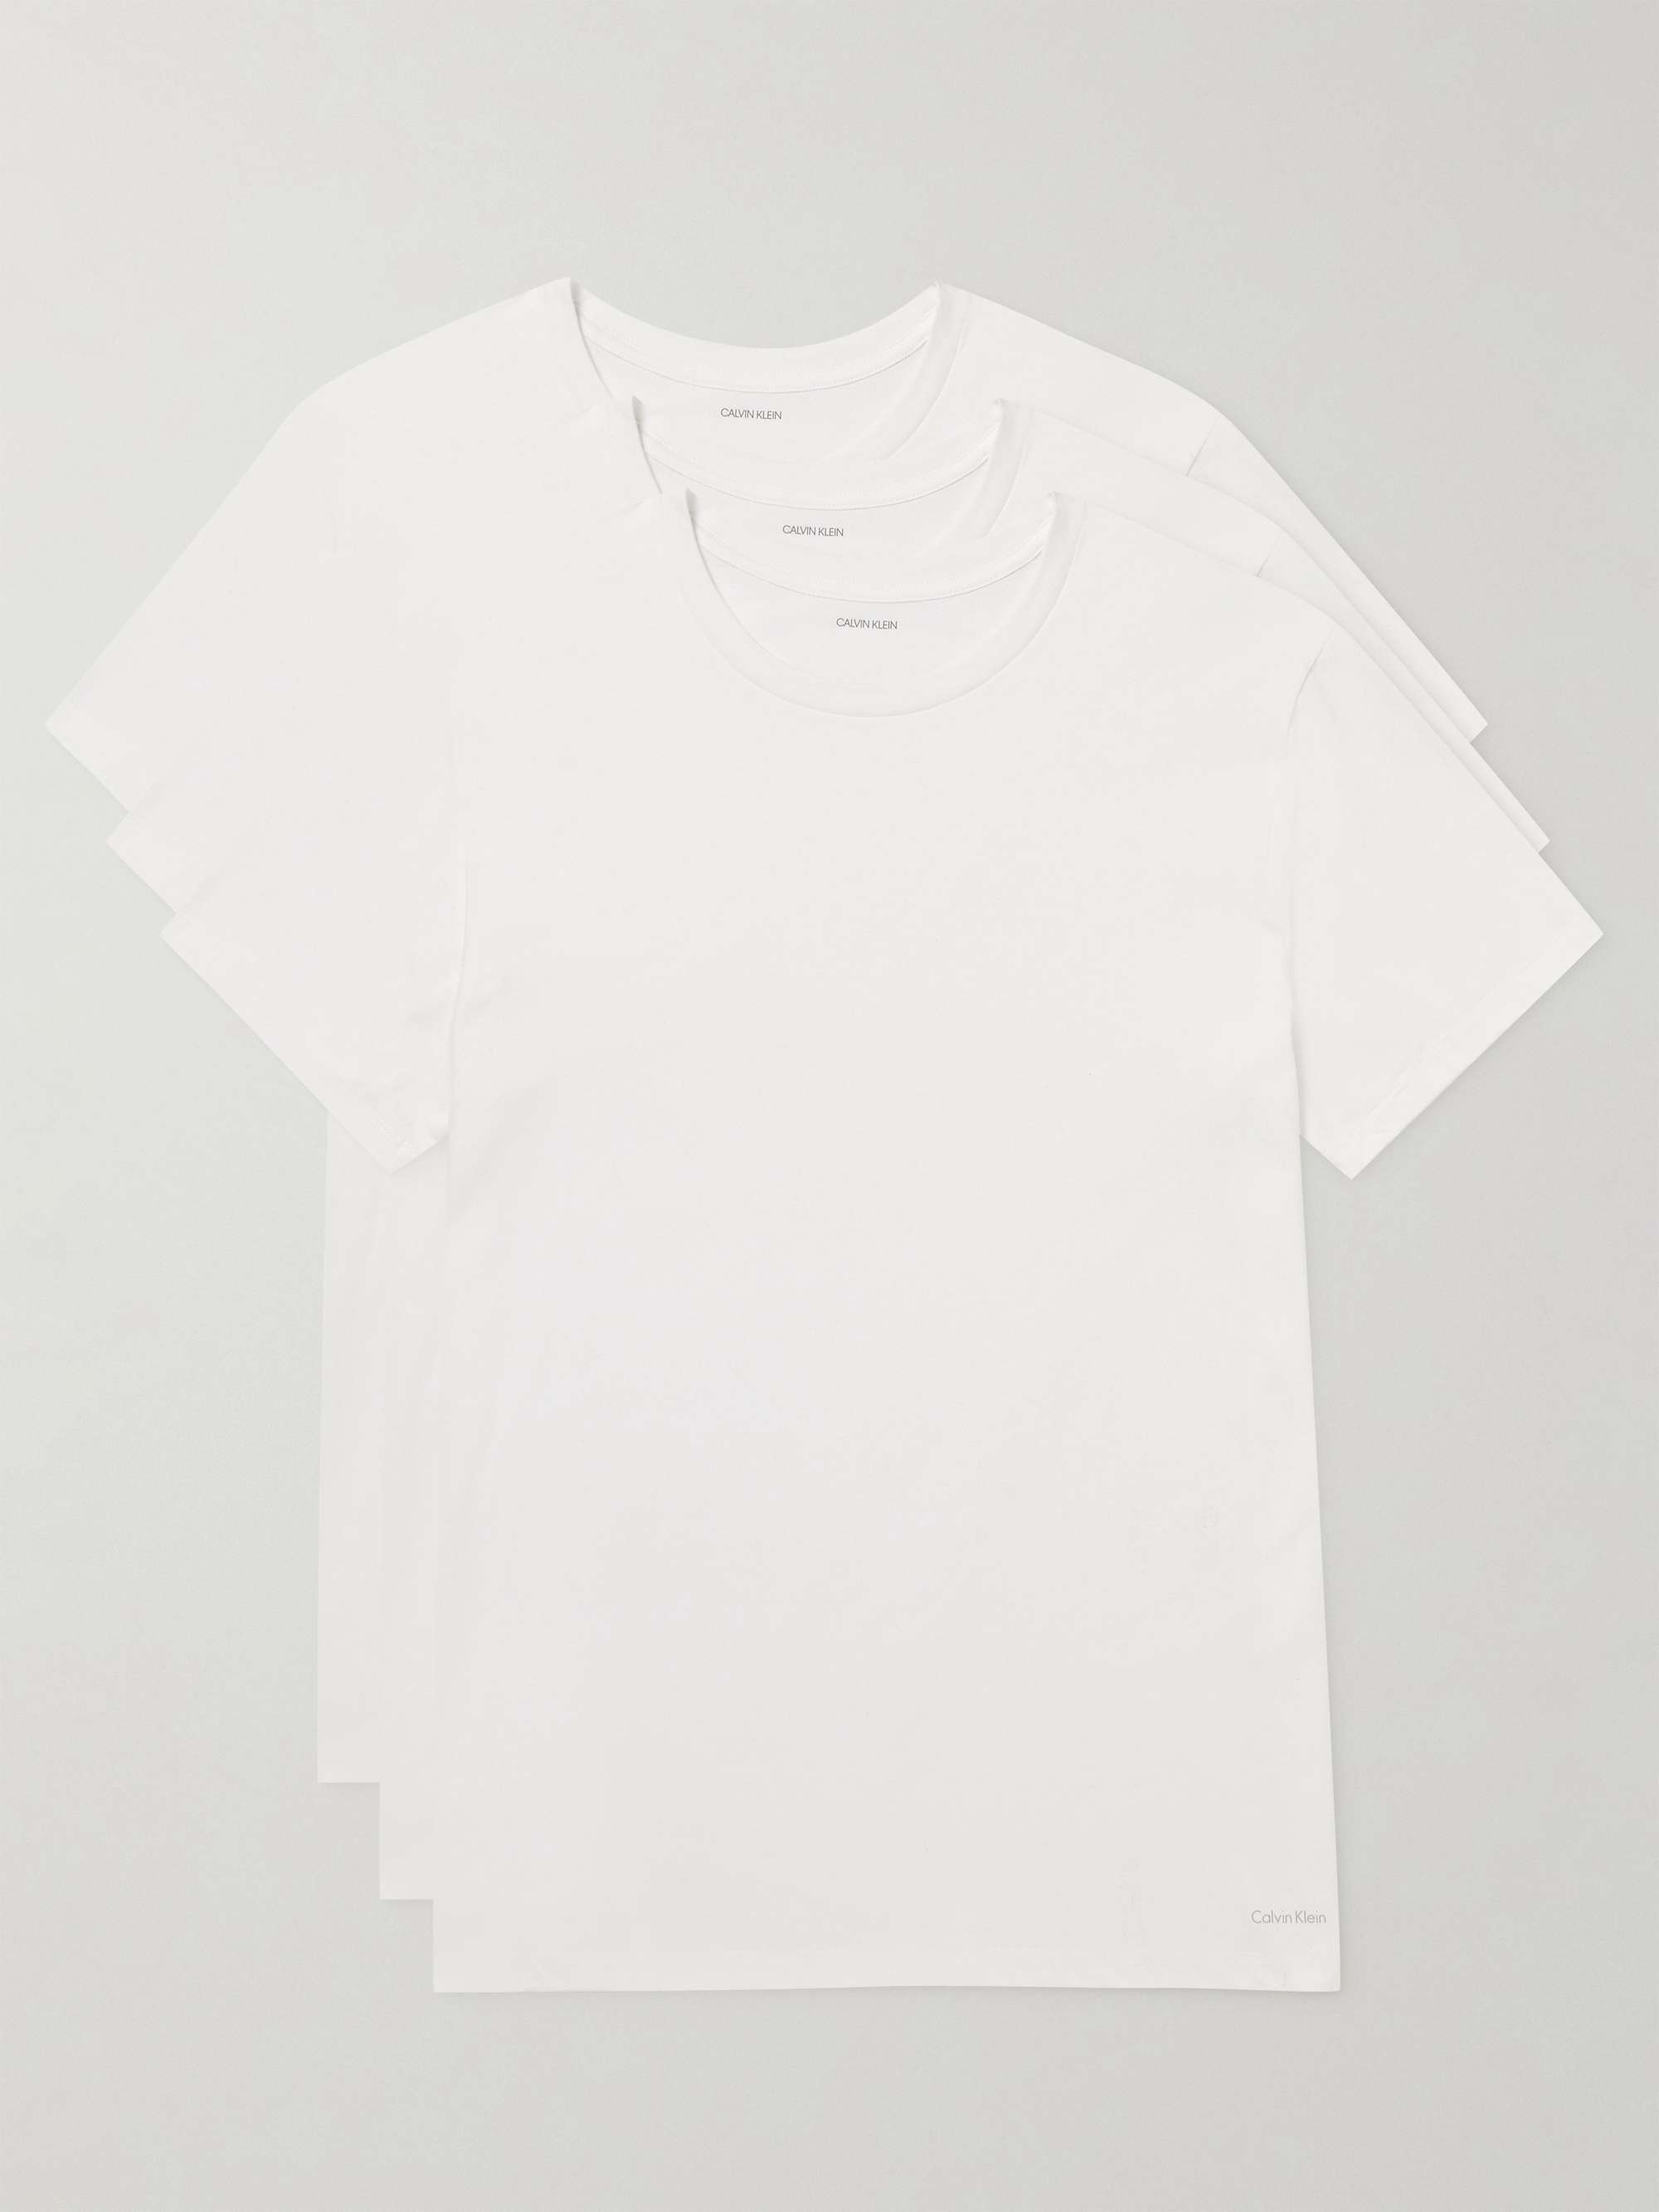 Calvin Klein, Shirts, Calvin Klein Logo Tshirt